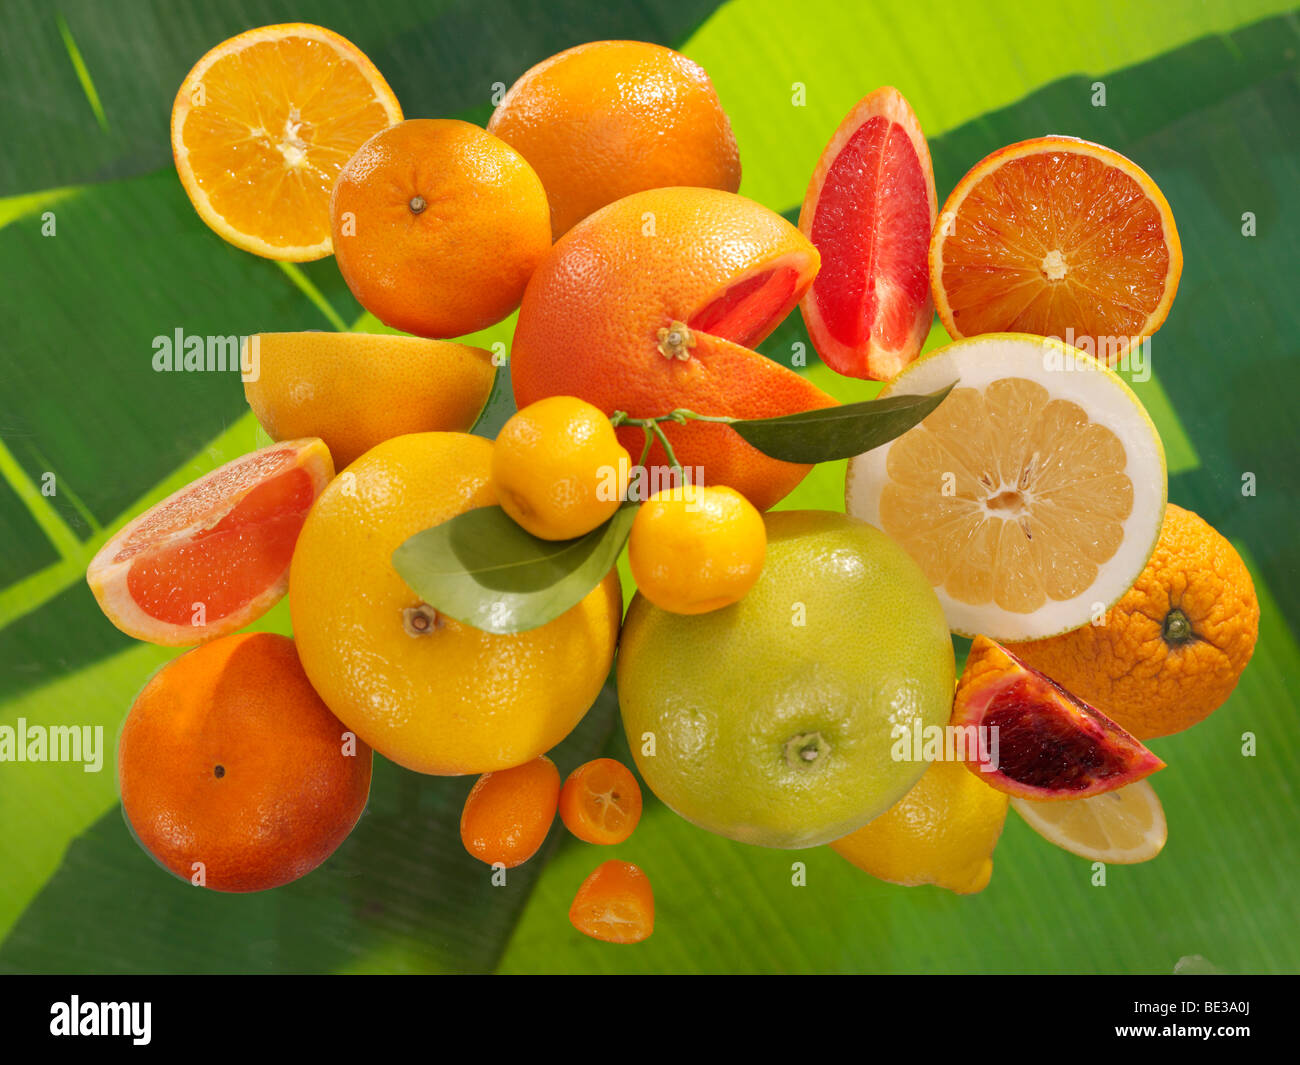 Citrus fruits on banana leaf, oranges, blood oranges, grapefruit, sweeties, kumquats, tangerine Stock Photo